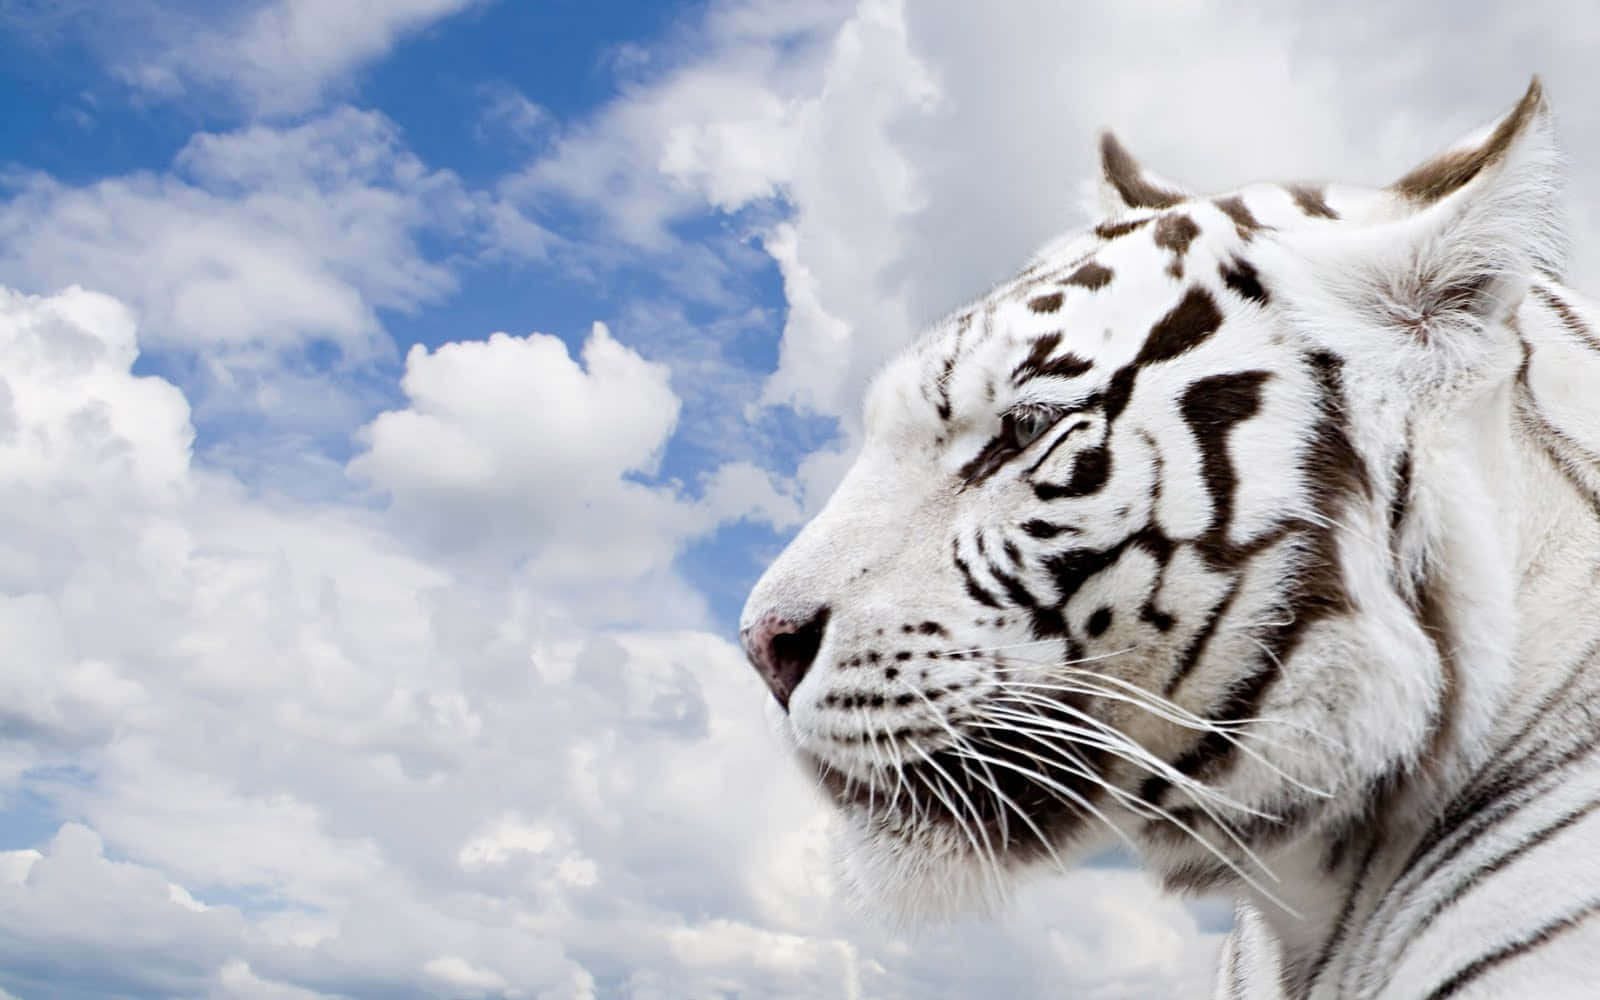 A stunning 3D rendering of a fierce tiger emerging from the wilderness Wallpaper